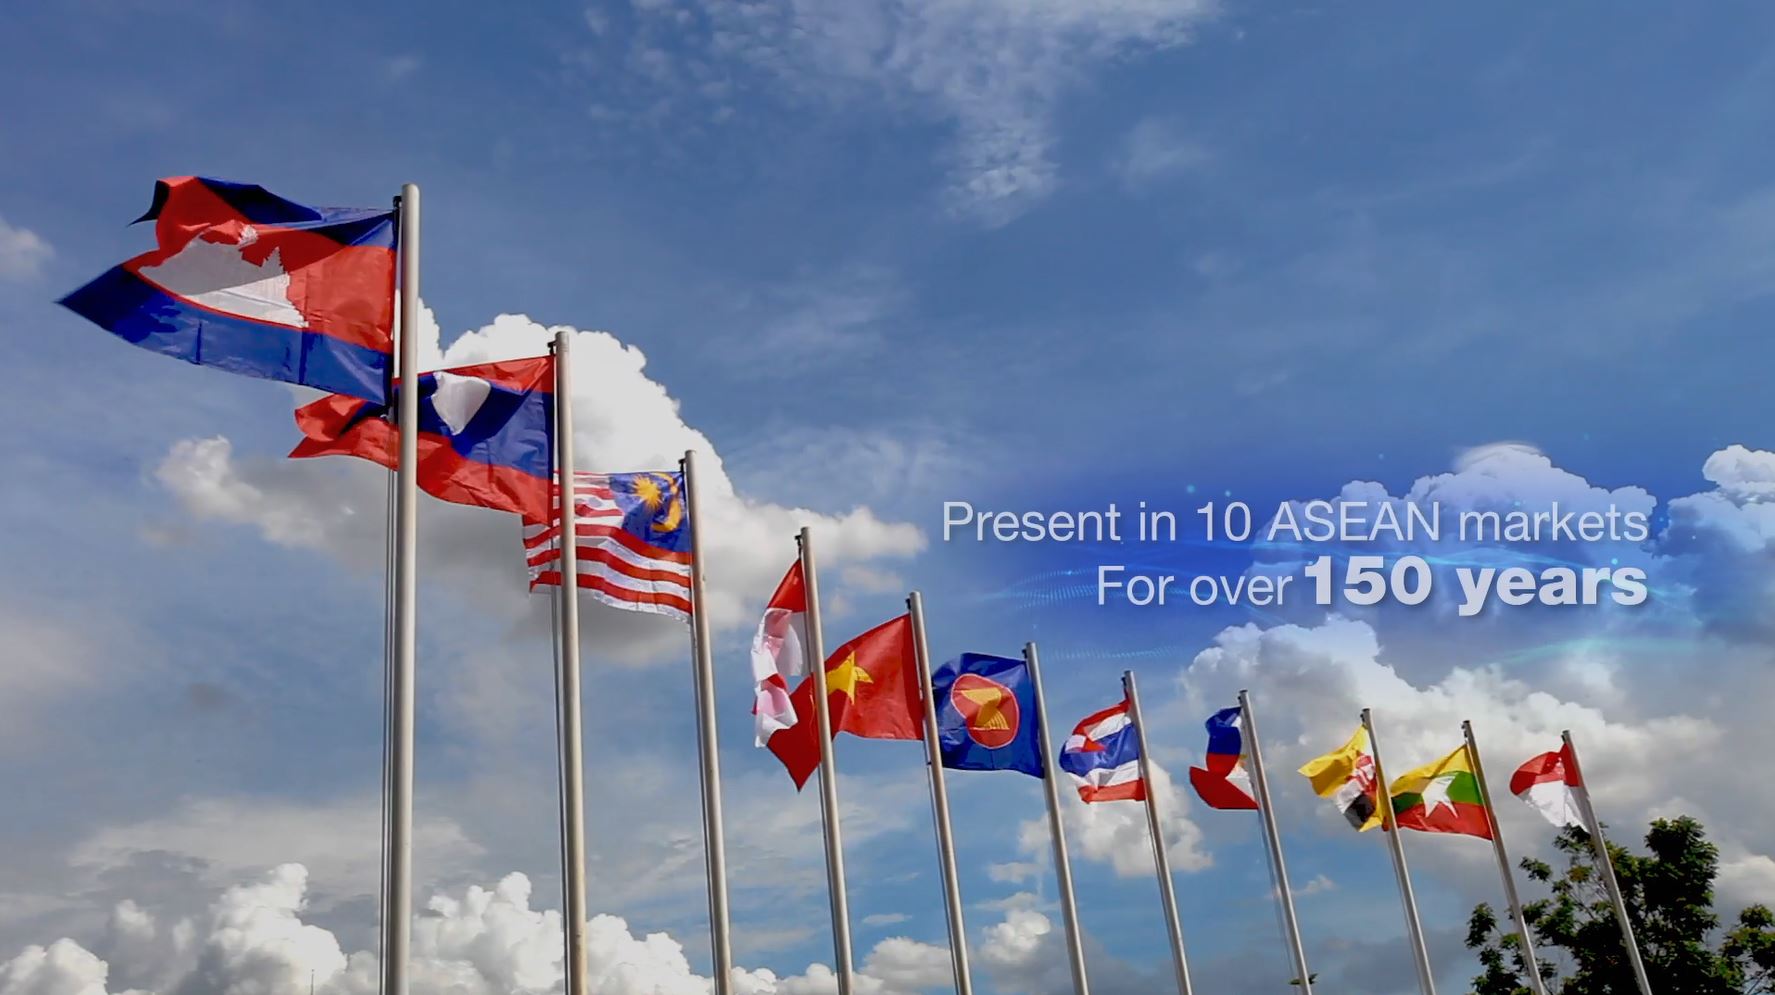 2020 ASEAN Corporate Video Image